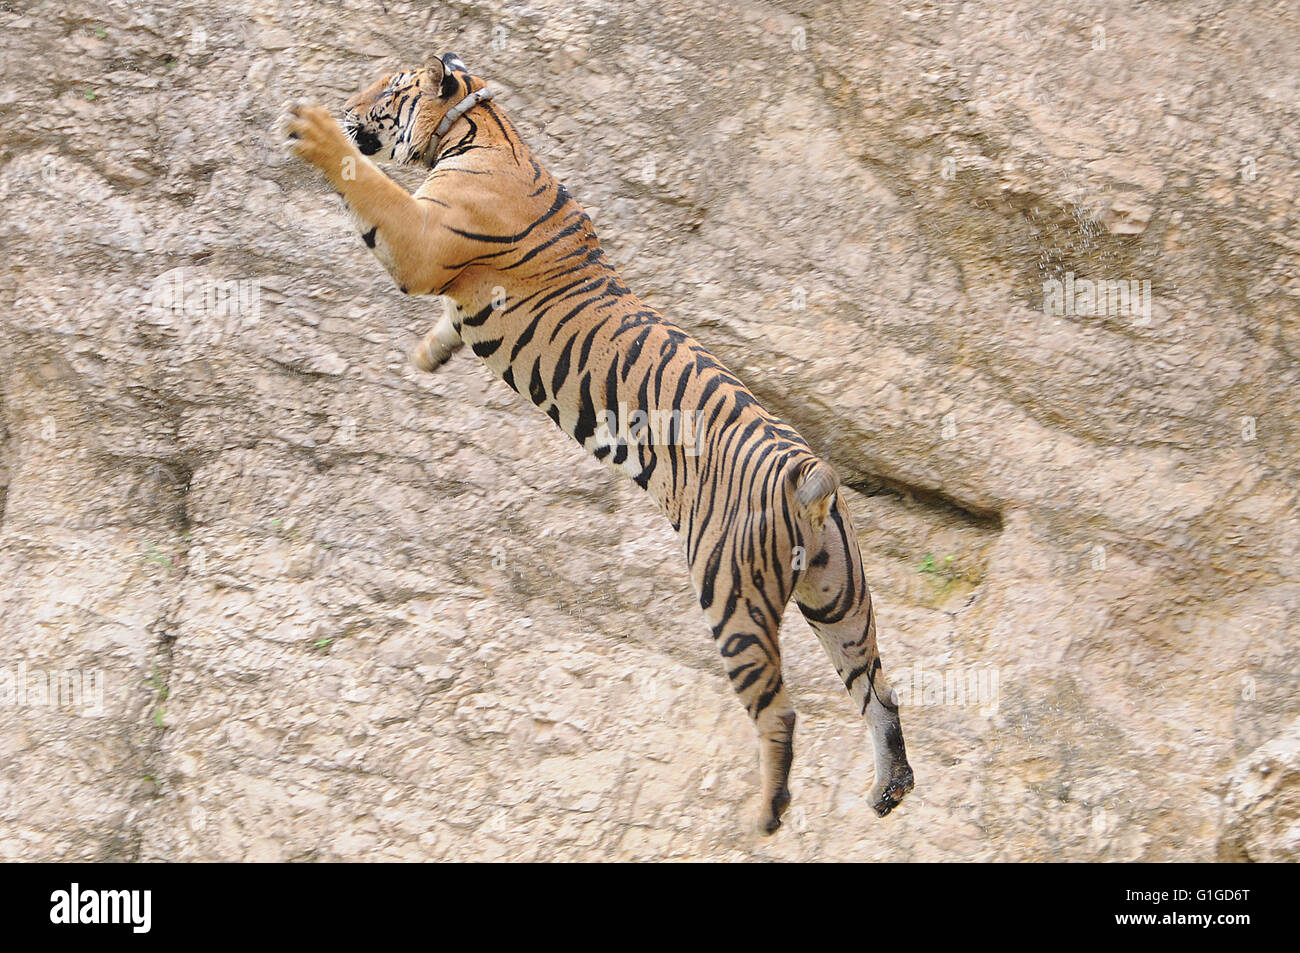 Tiger jumps into the water, Wat Pa Luangta Maha Bua, Thailand Stock Photo